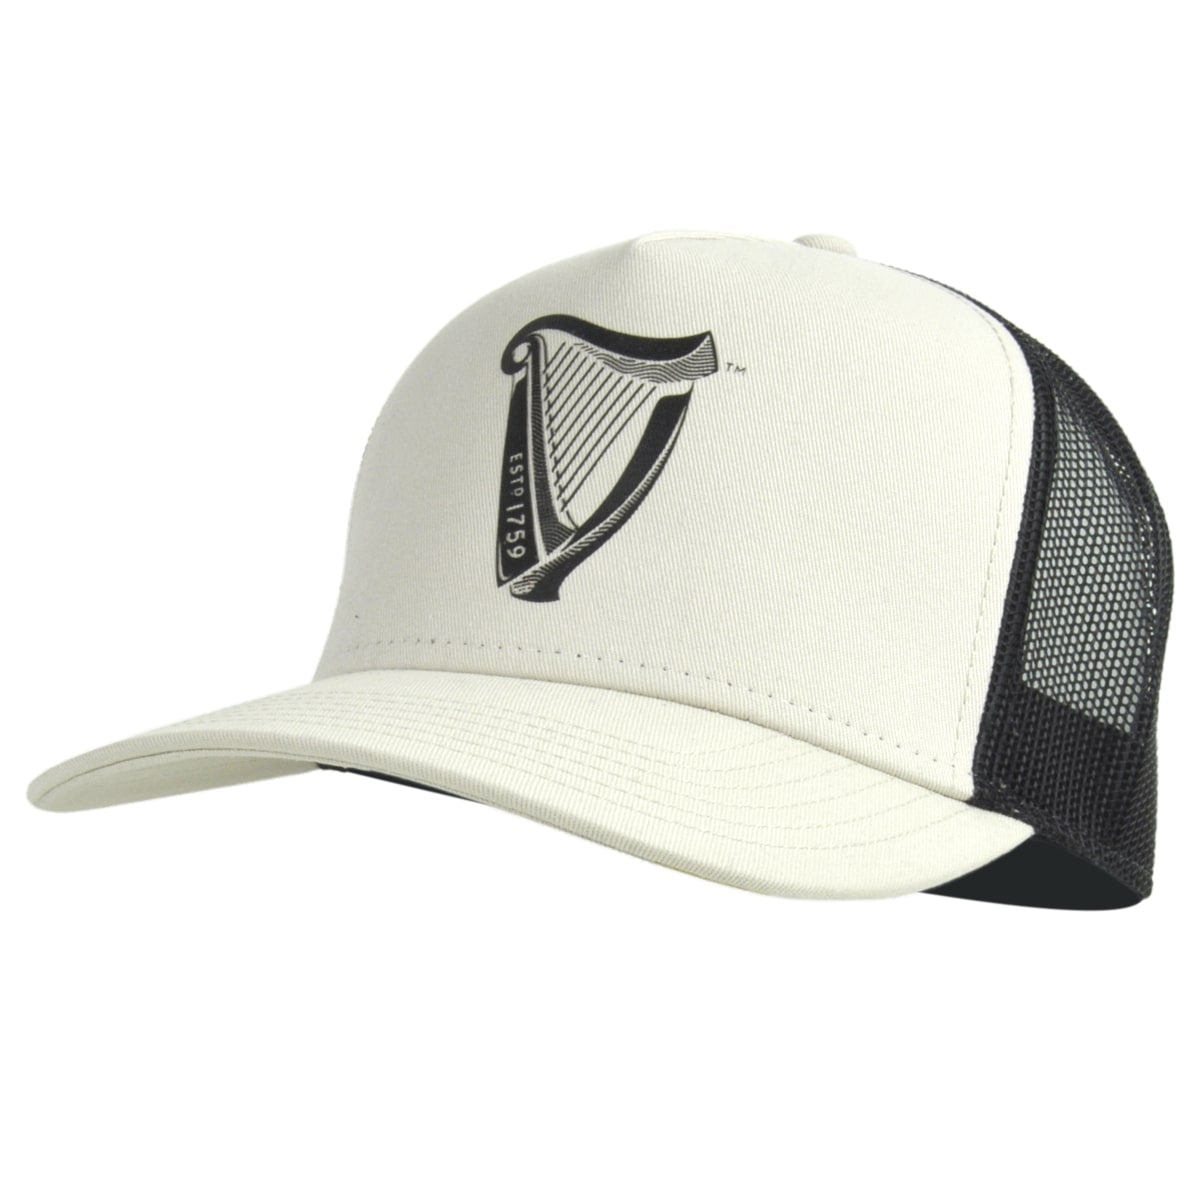 A Guinness UK Premium Beige with Black Harp Cap hat.